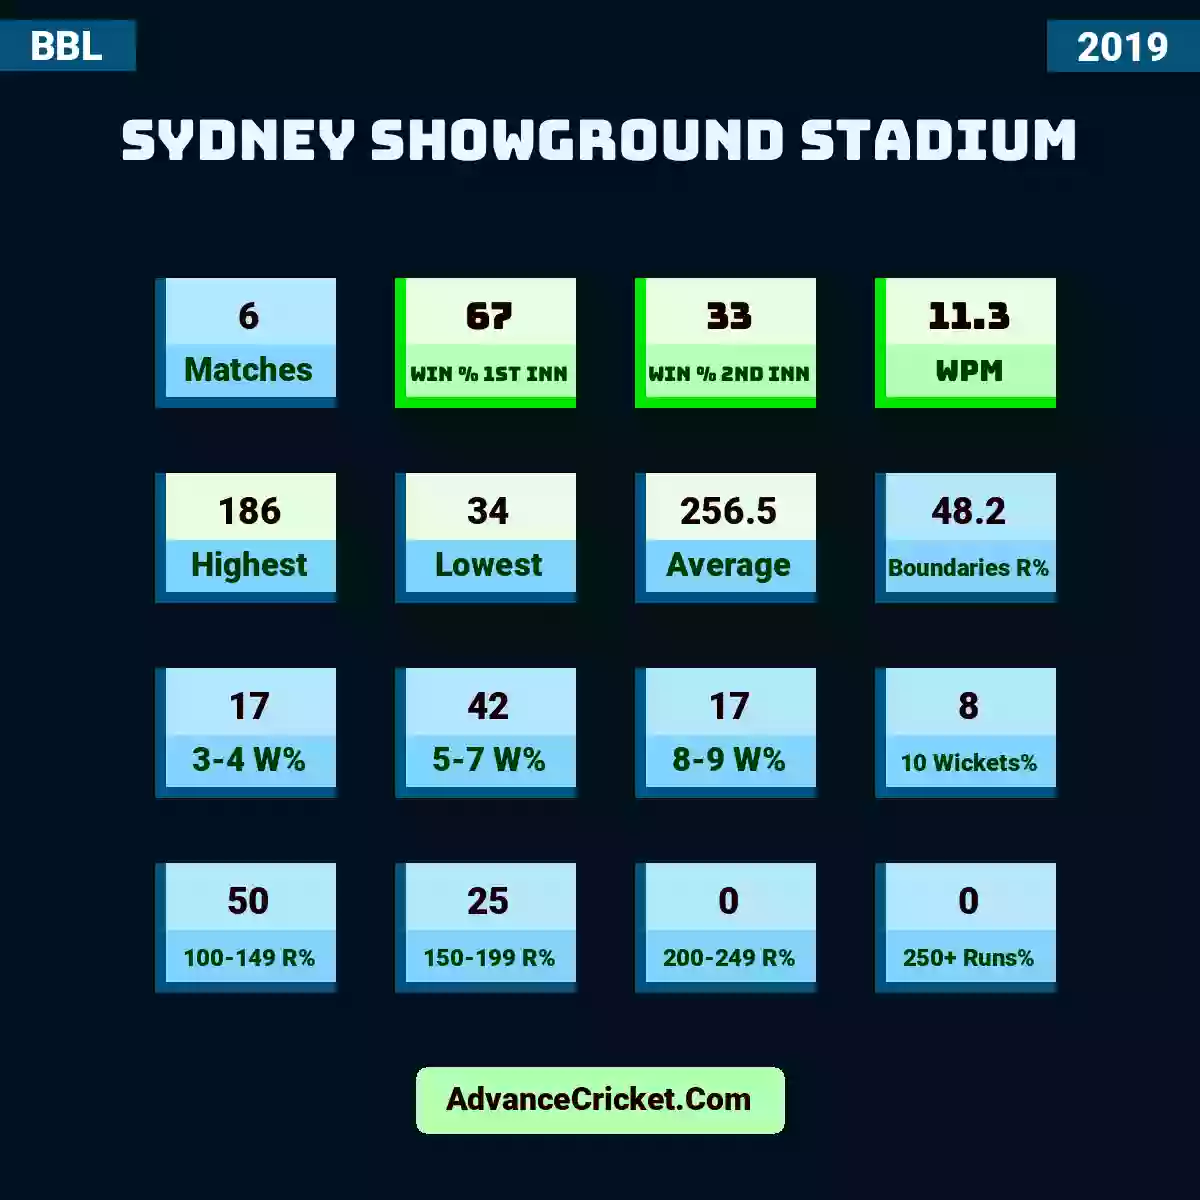 Image showing Sydney Showground Stadium with Matches: 6, Win % 1st Inn: 67, Win % 2nd Inn: 33, WPM: 11.3, Highest: 186, Lowest: 34, Average: 256.5, Boundaries R%: 48.2, 3-4 W%: 17, 5-7 W%: 42, 8-9 W%: 17, 10 Wickets%: 8, 100-149 R%: 50, 150-199 R%: 25, 200-249 R%: 0, 250+ Runs%: 0.